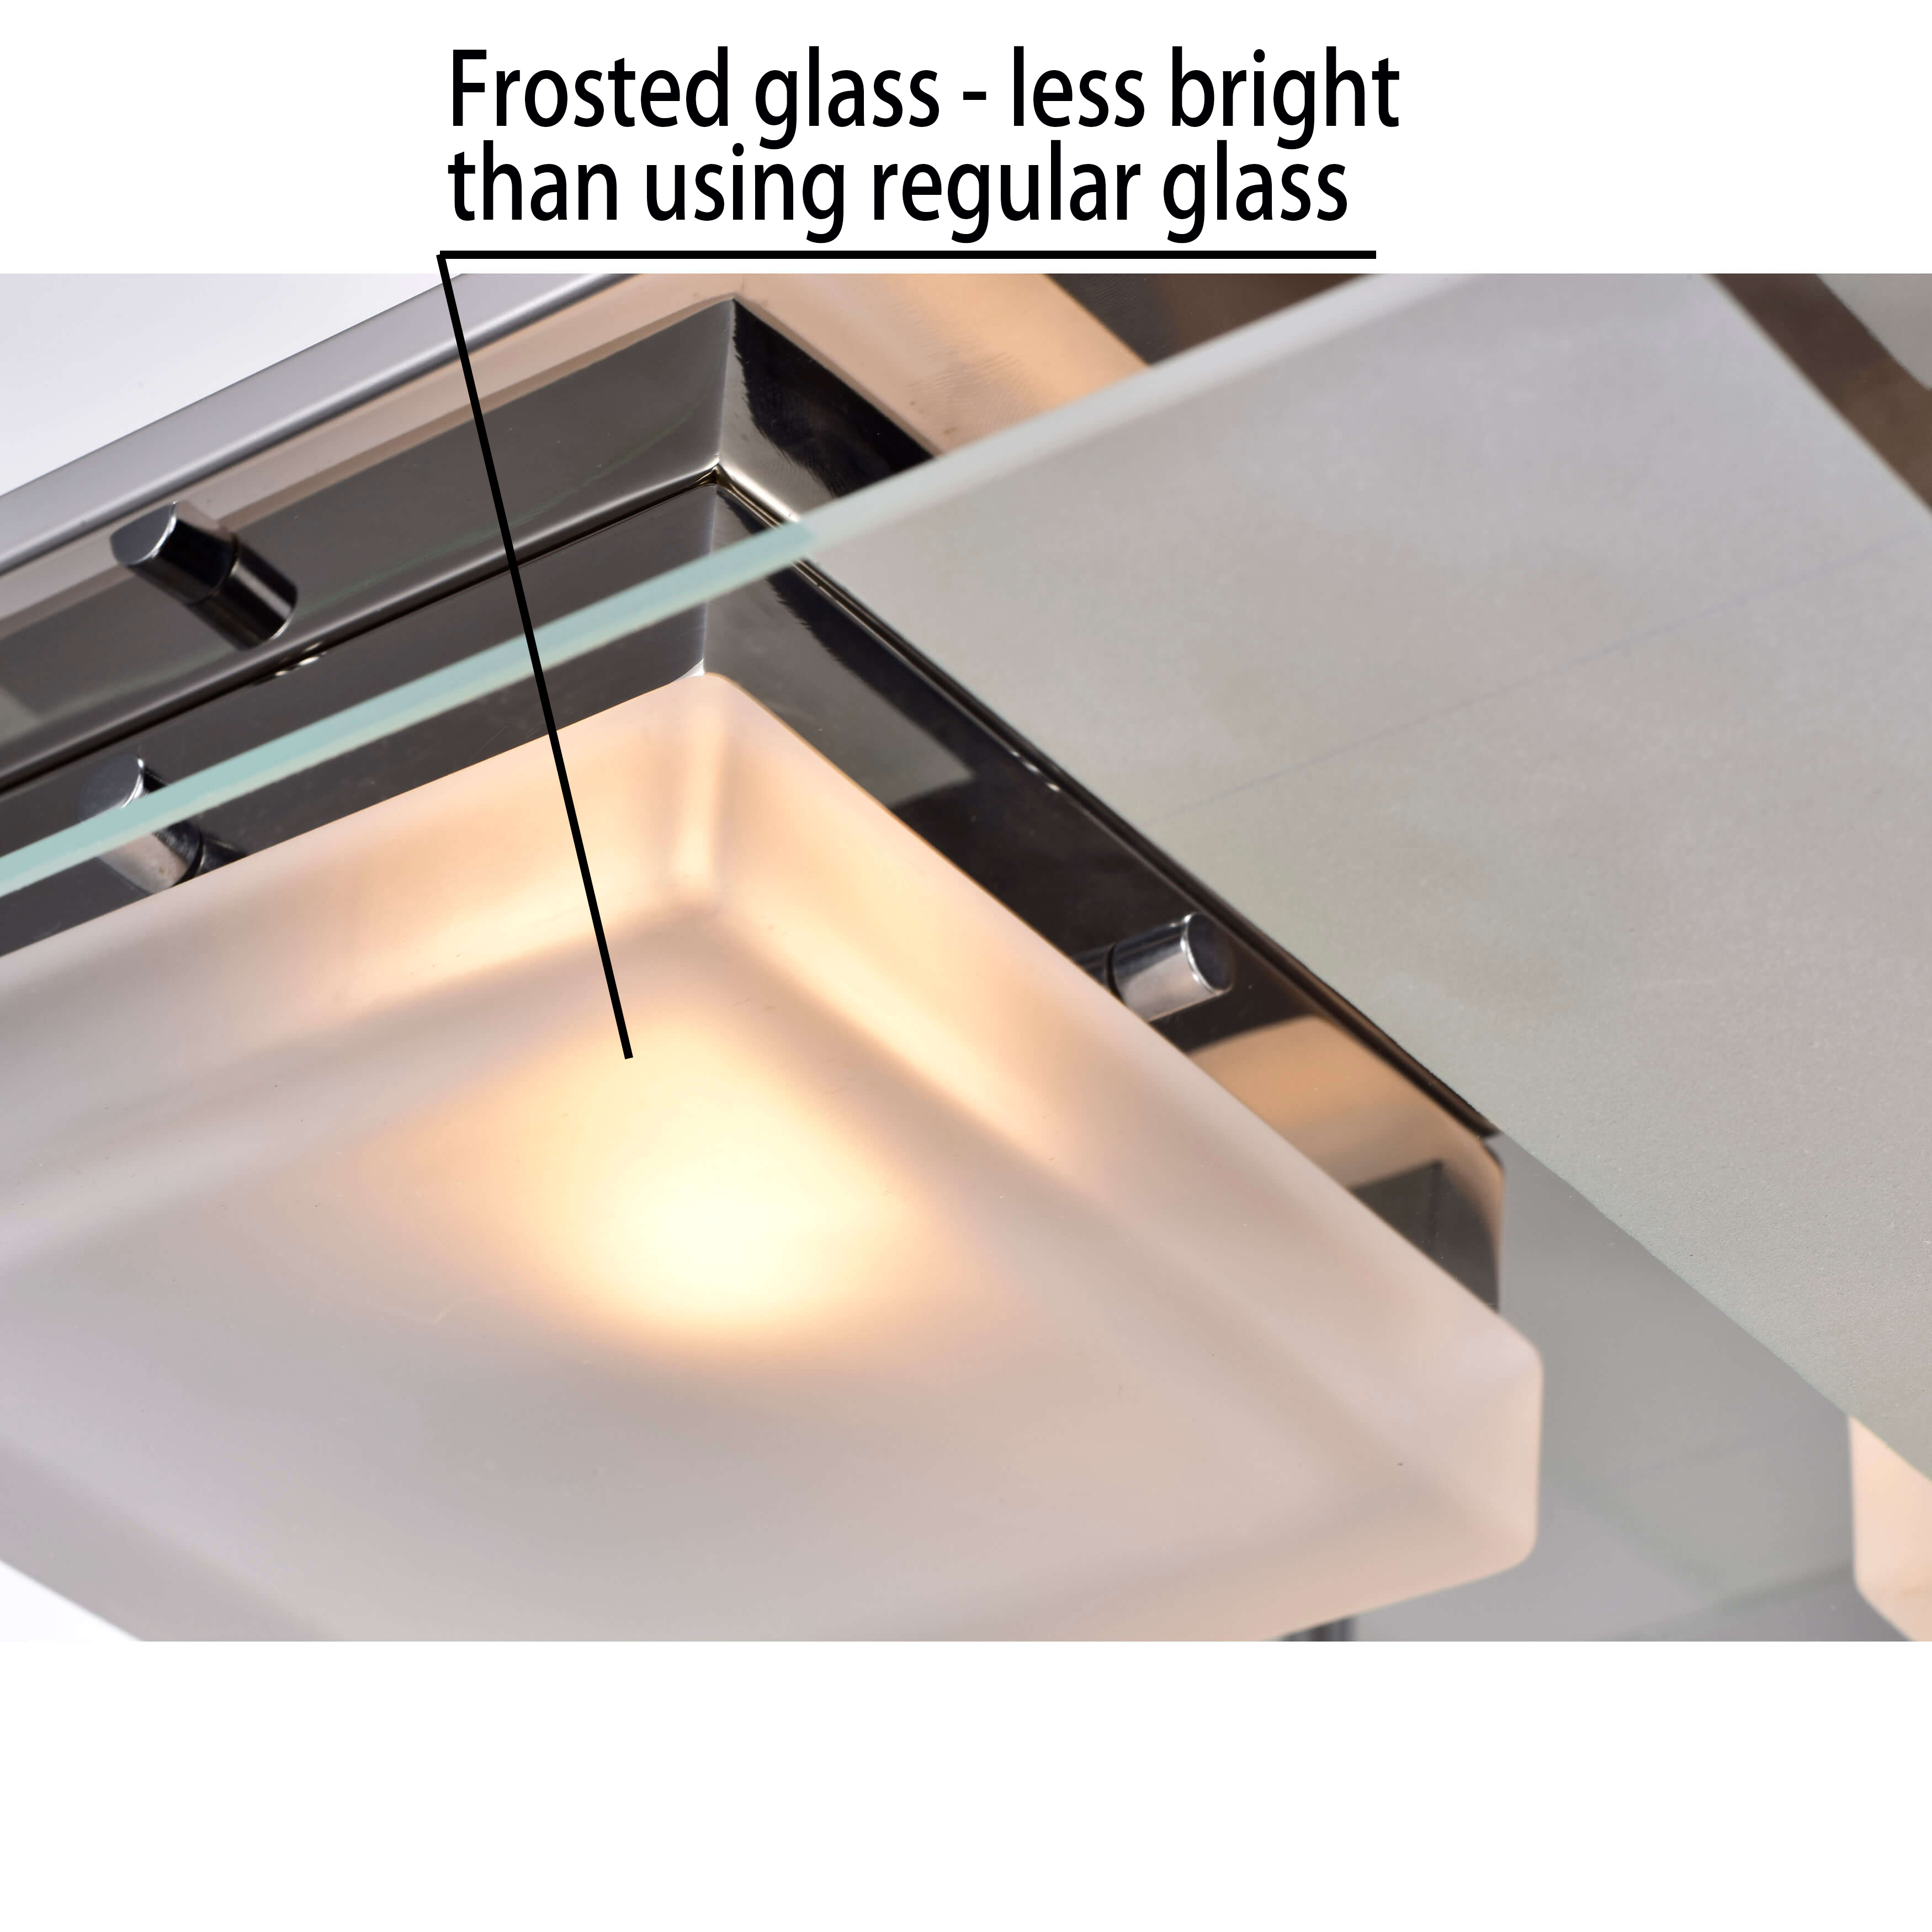 Lucia Chrome 2-light Square Frosted Glass Flush Mount Ceiling Light LJ-0470-TFY